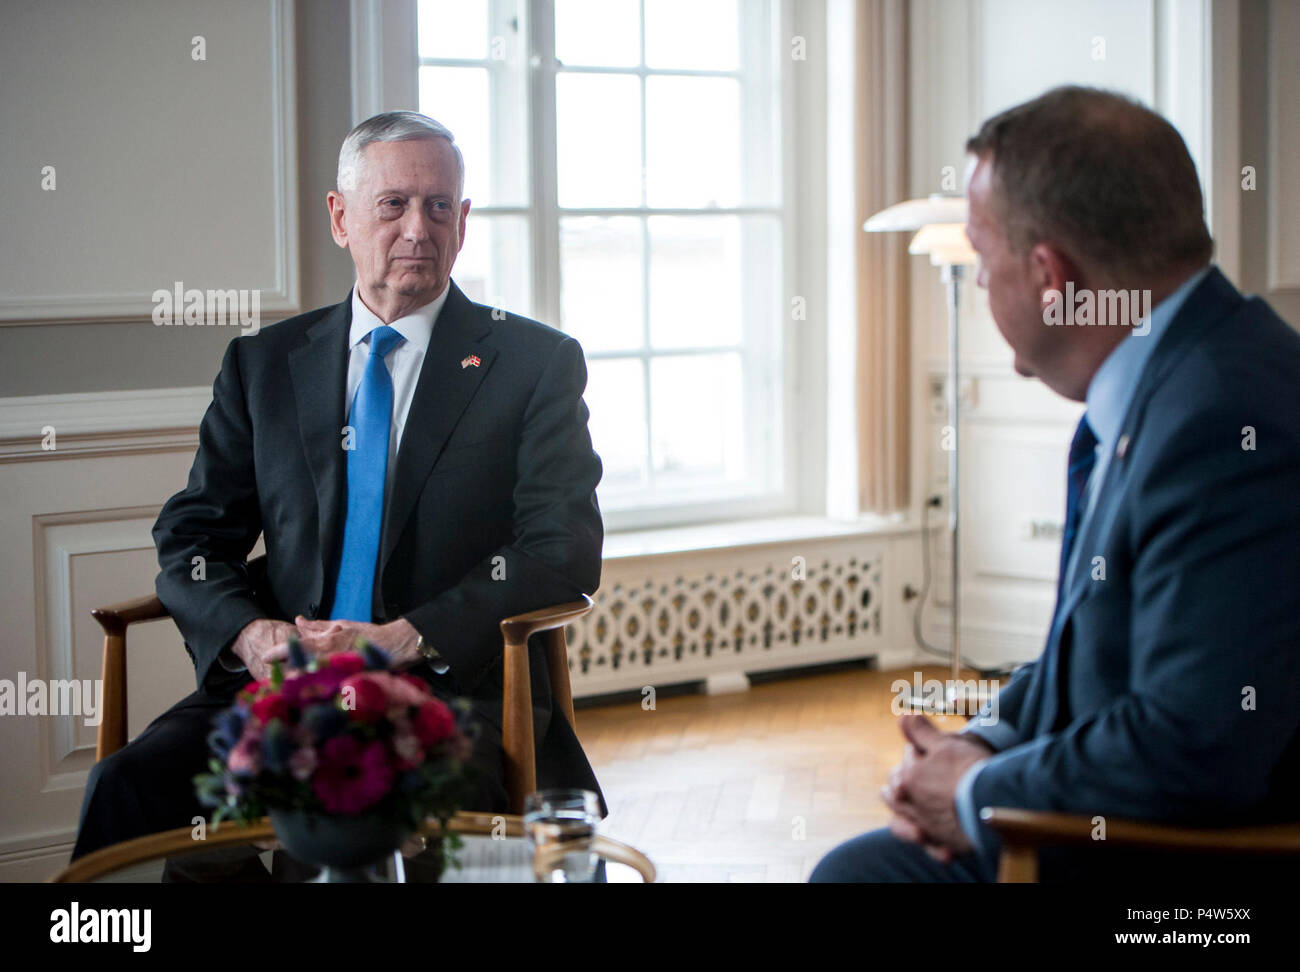 Secretary of Defense Jim Mattis meets with Lars Løkke Rasmussen, the prime minister of Denmark, at the Christiansborg Palace in Copenhagen, Denmark, May 9, 2017. (DOD Stock Photo